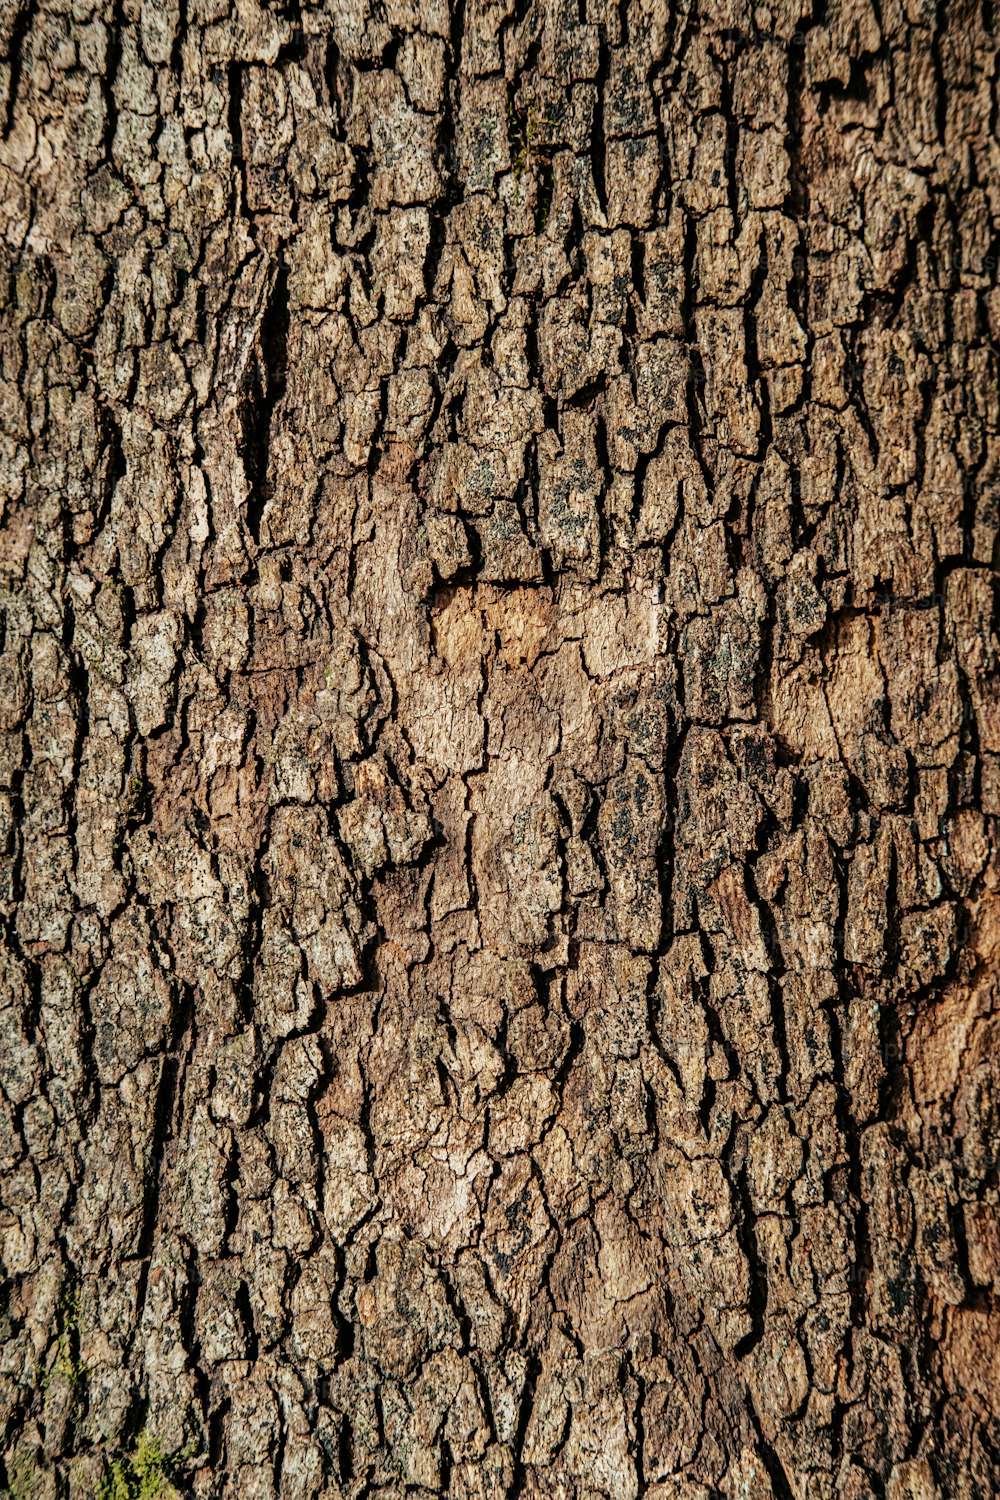 un gros plan de la texture de l’écorce d’un arbre